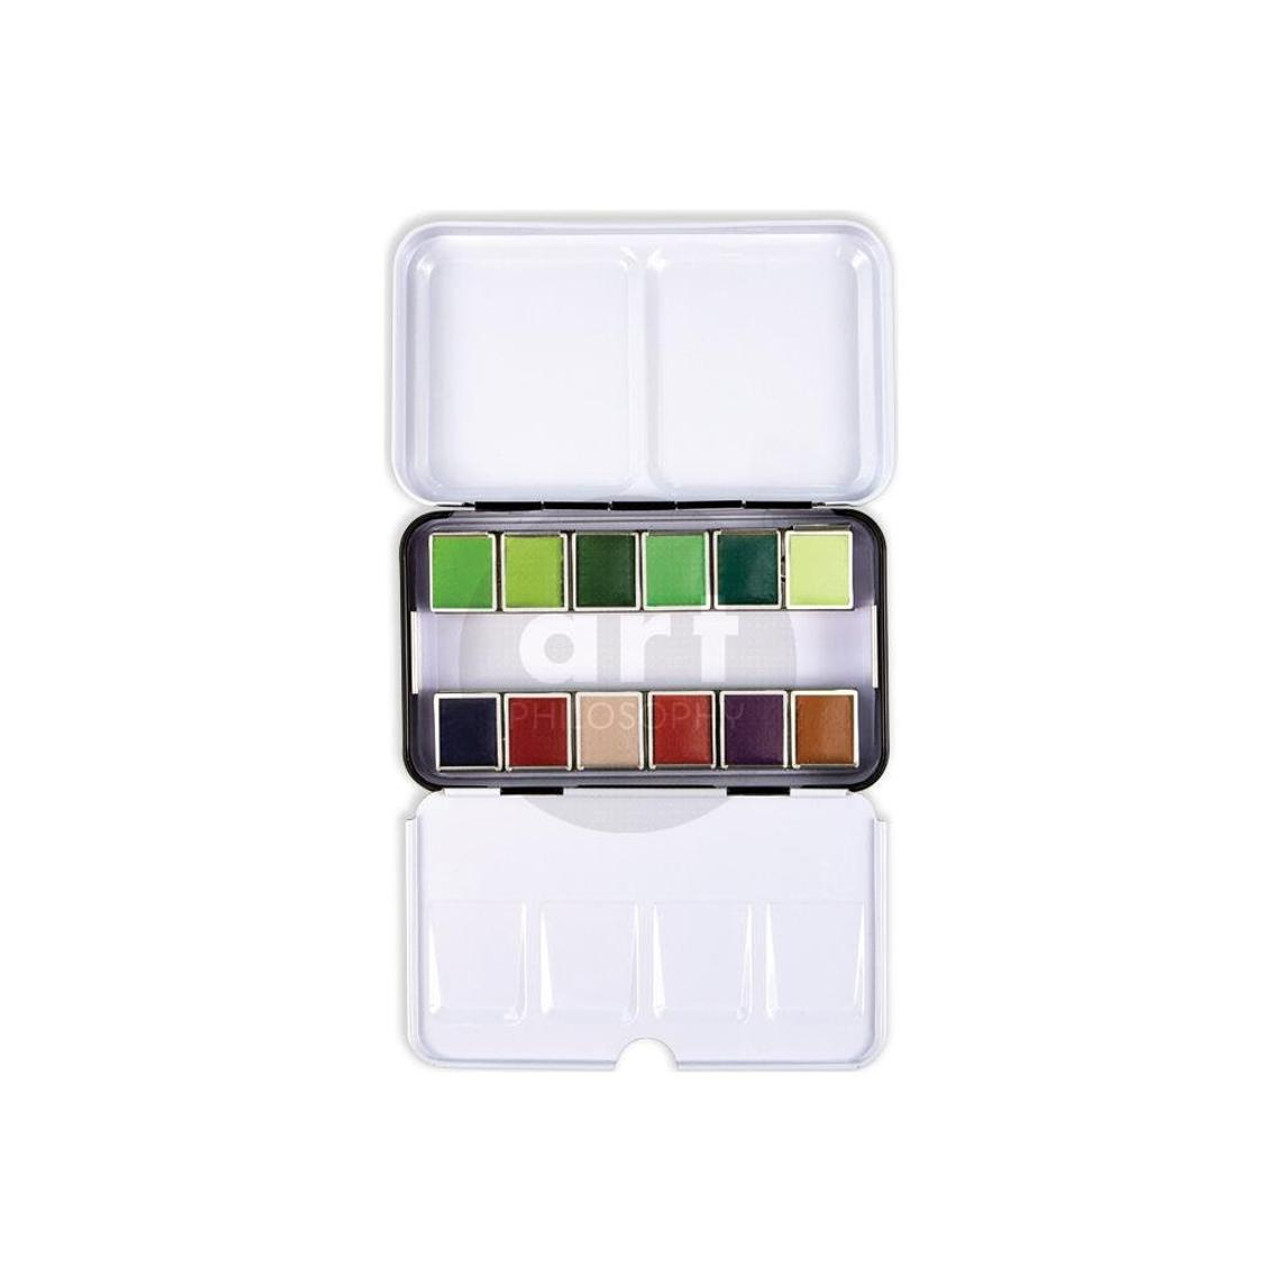 Terrain - Prima Marketing Watercolor Paint Confections: 12-Color Half Pan Set in Metal Box - Bible Journaling Supplies